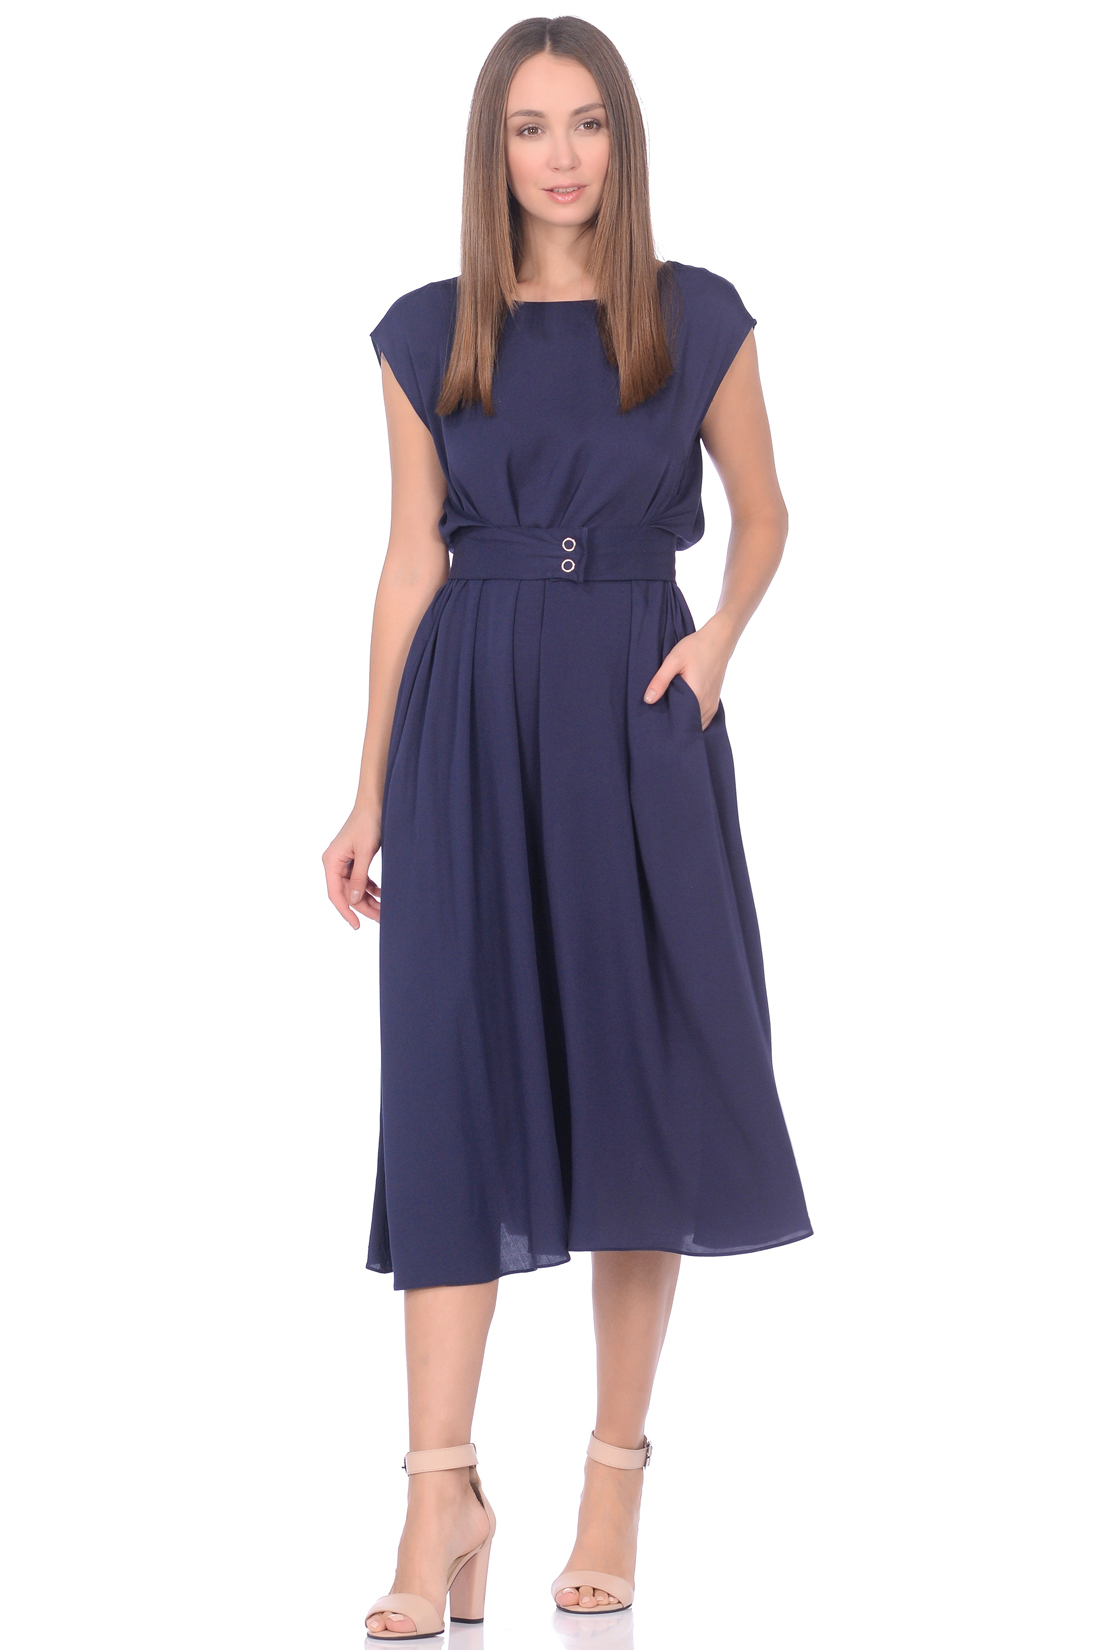 Платье с вшитым поясом (арт. baon B459066), размер L, цвет синий Платье с вшитым поясом (арт. baon B459066) - фото 1